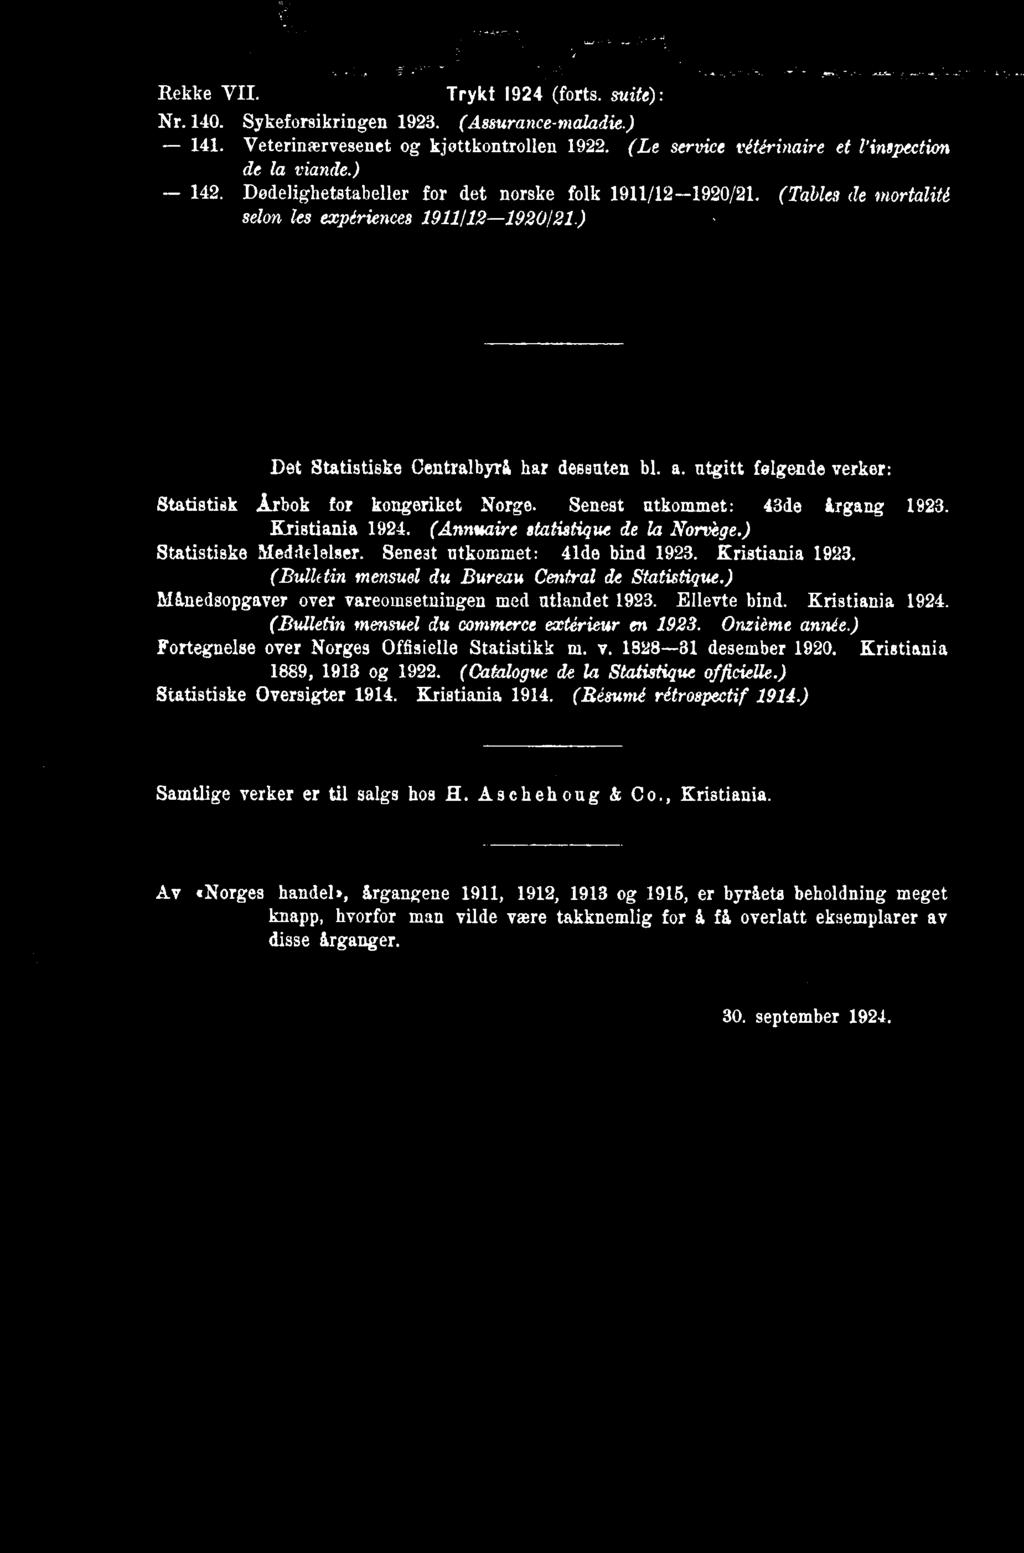 (Bulletin mensuel du commerce extérieur en 1923. Onzième année.) Fortegnelse over Norges Offisielle Statistikk ni. v. 1828-31 desember 1920. Kristiania 1889, 1913 og 1922.